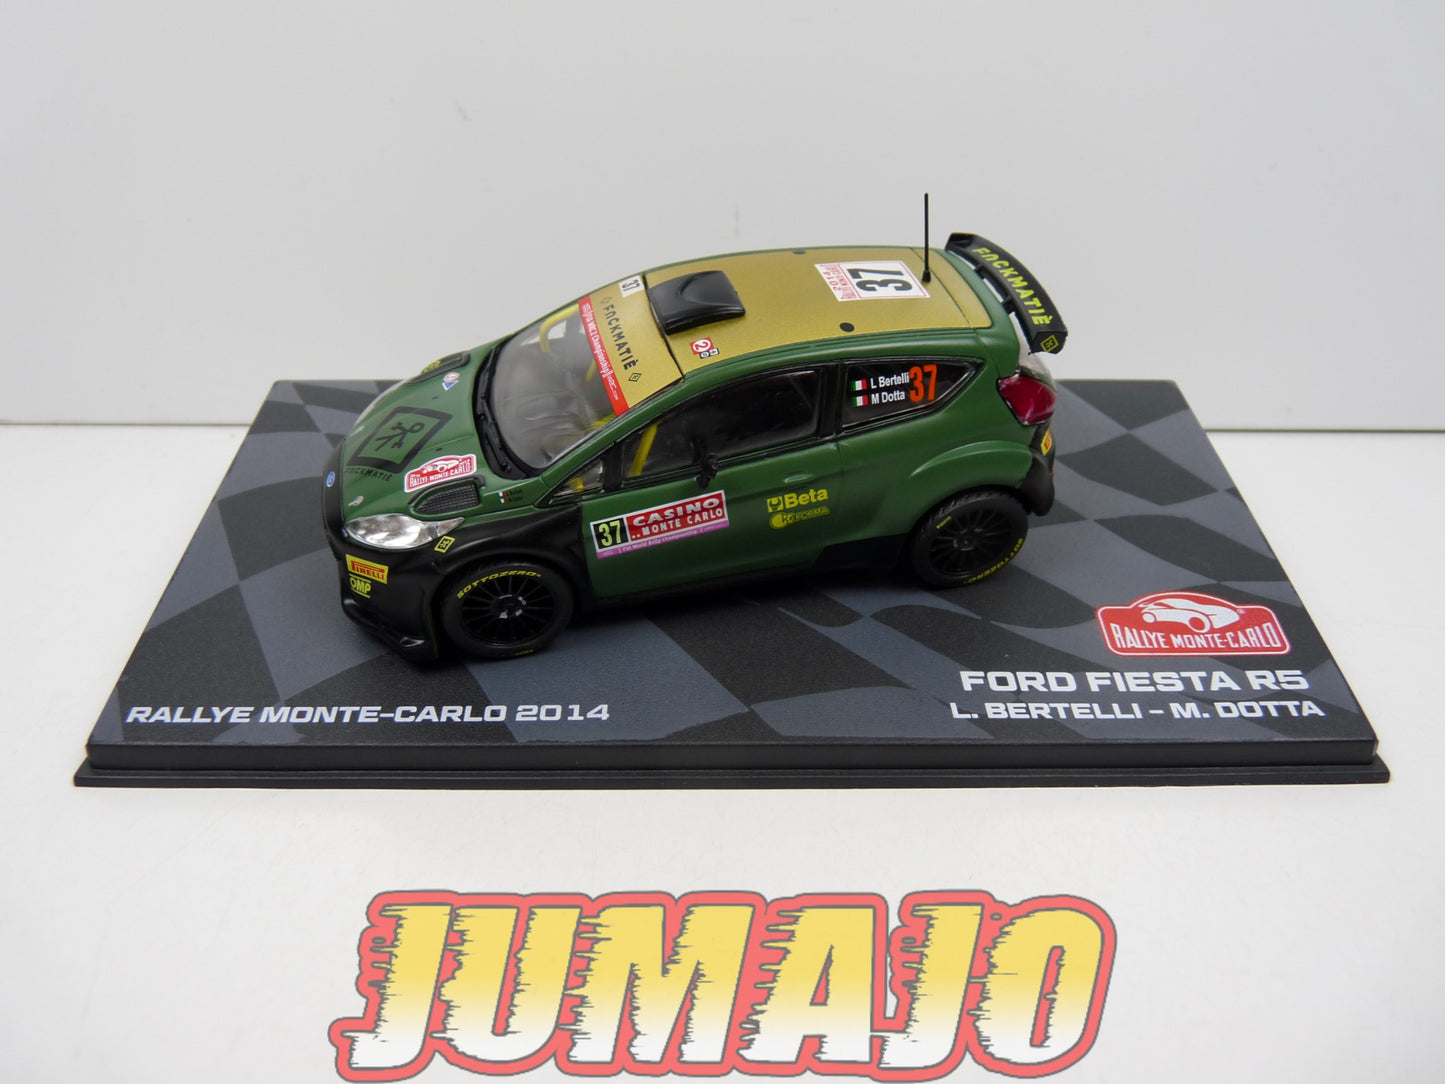 RMIT20 1/43 IXO Rallye Monte Carlo : FORD FIESTA R5 2014 L.Bertelli